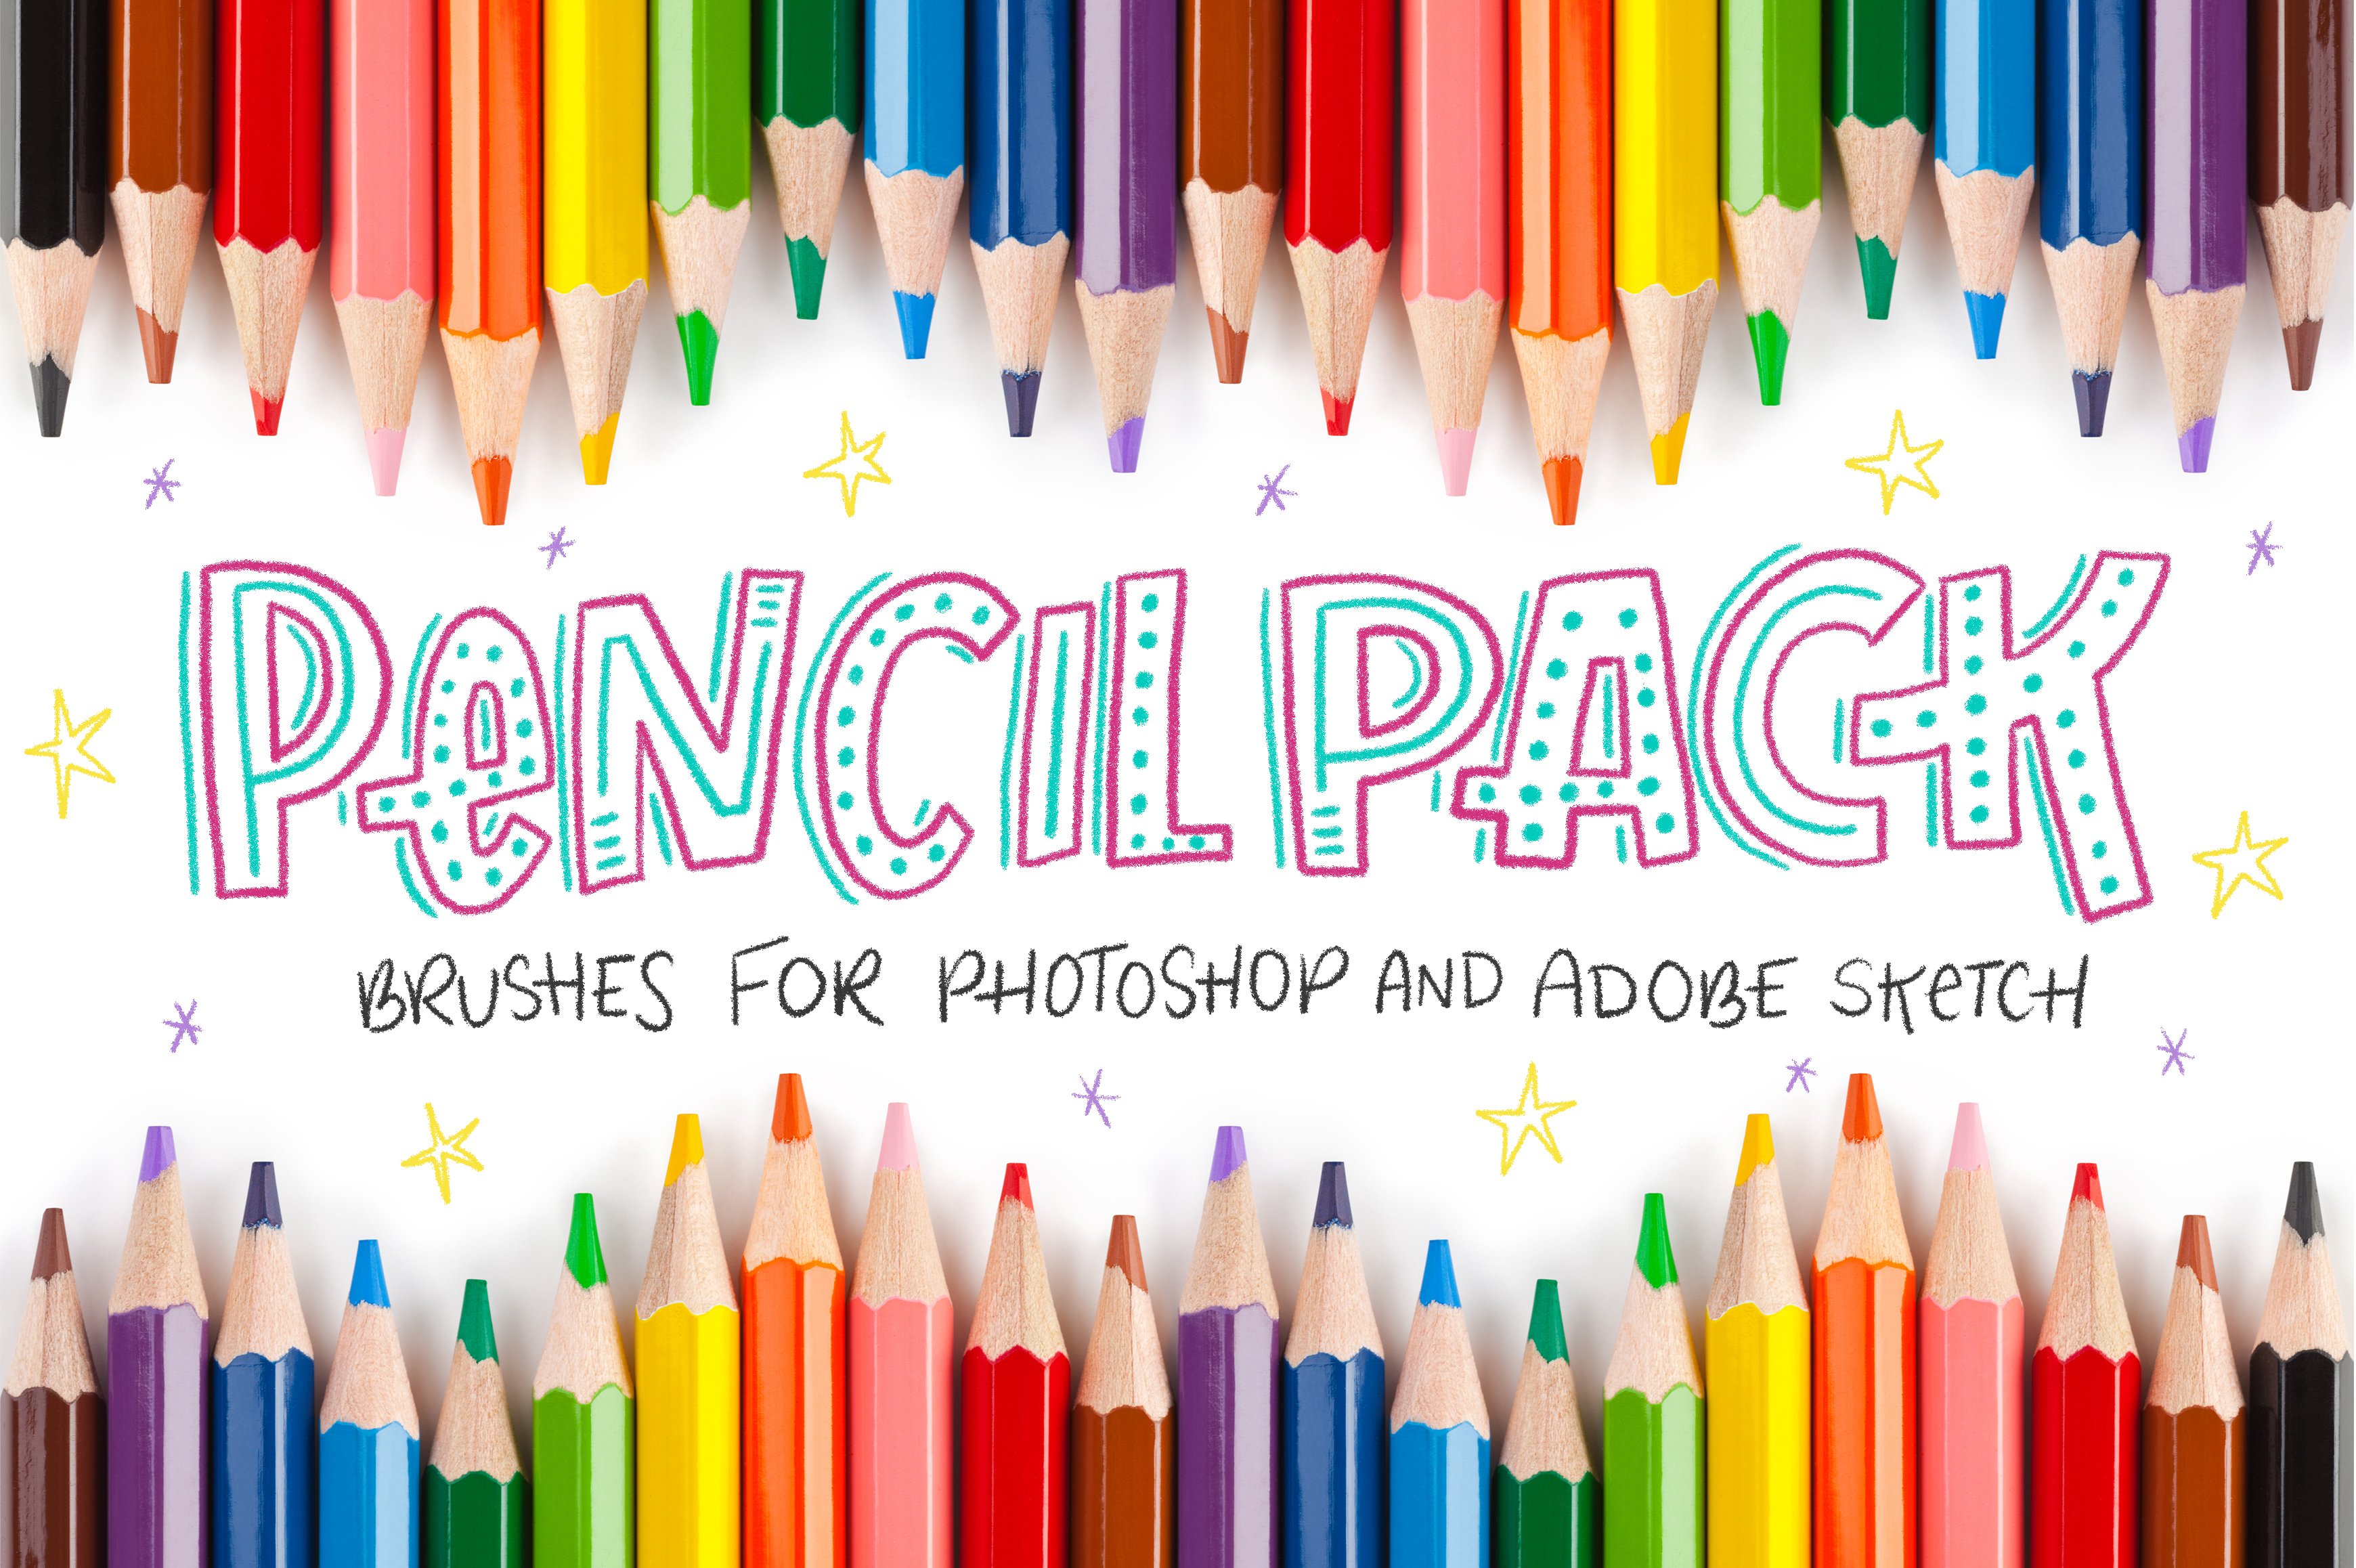 Pencil Pack Photoshop Brushescover image.